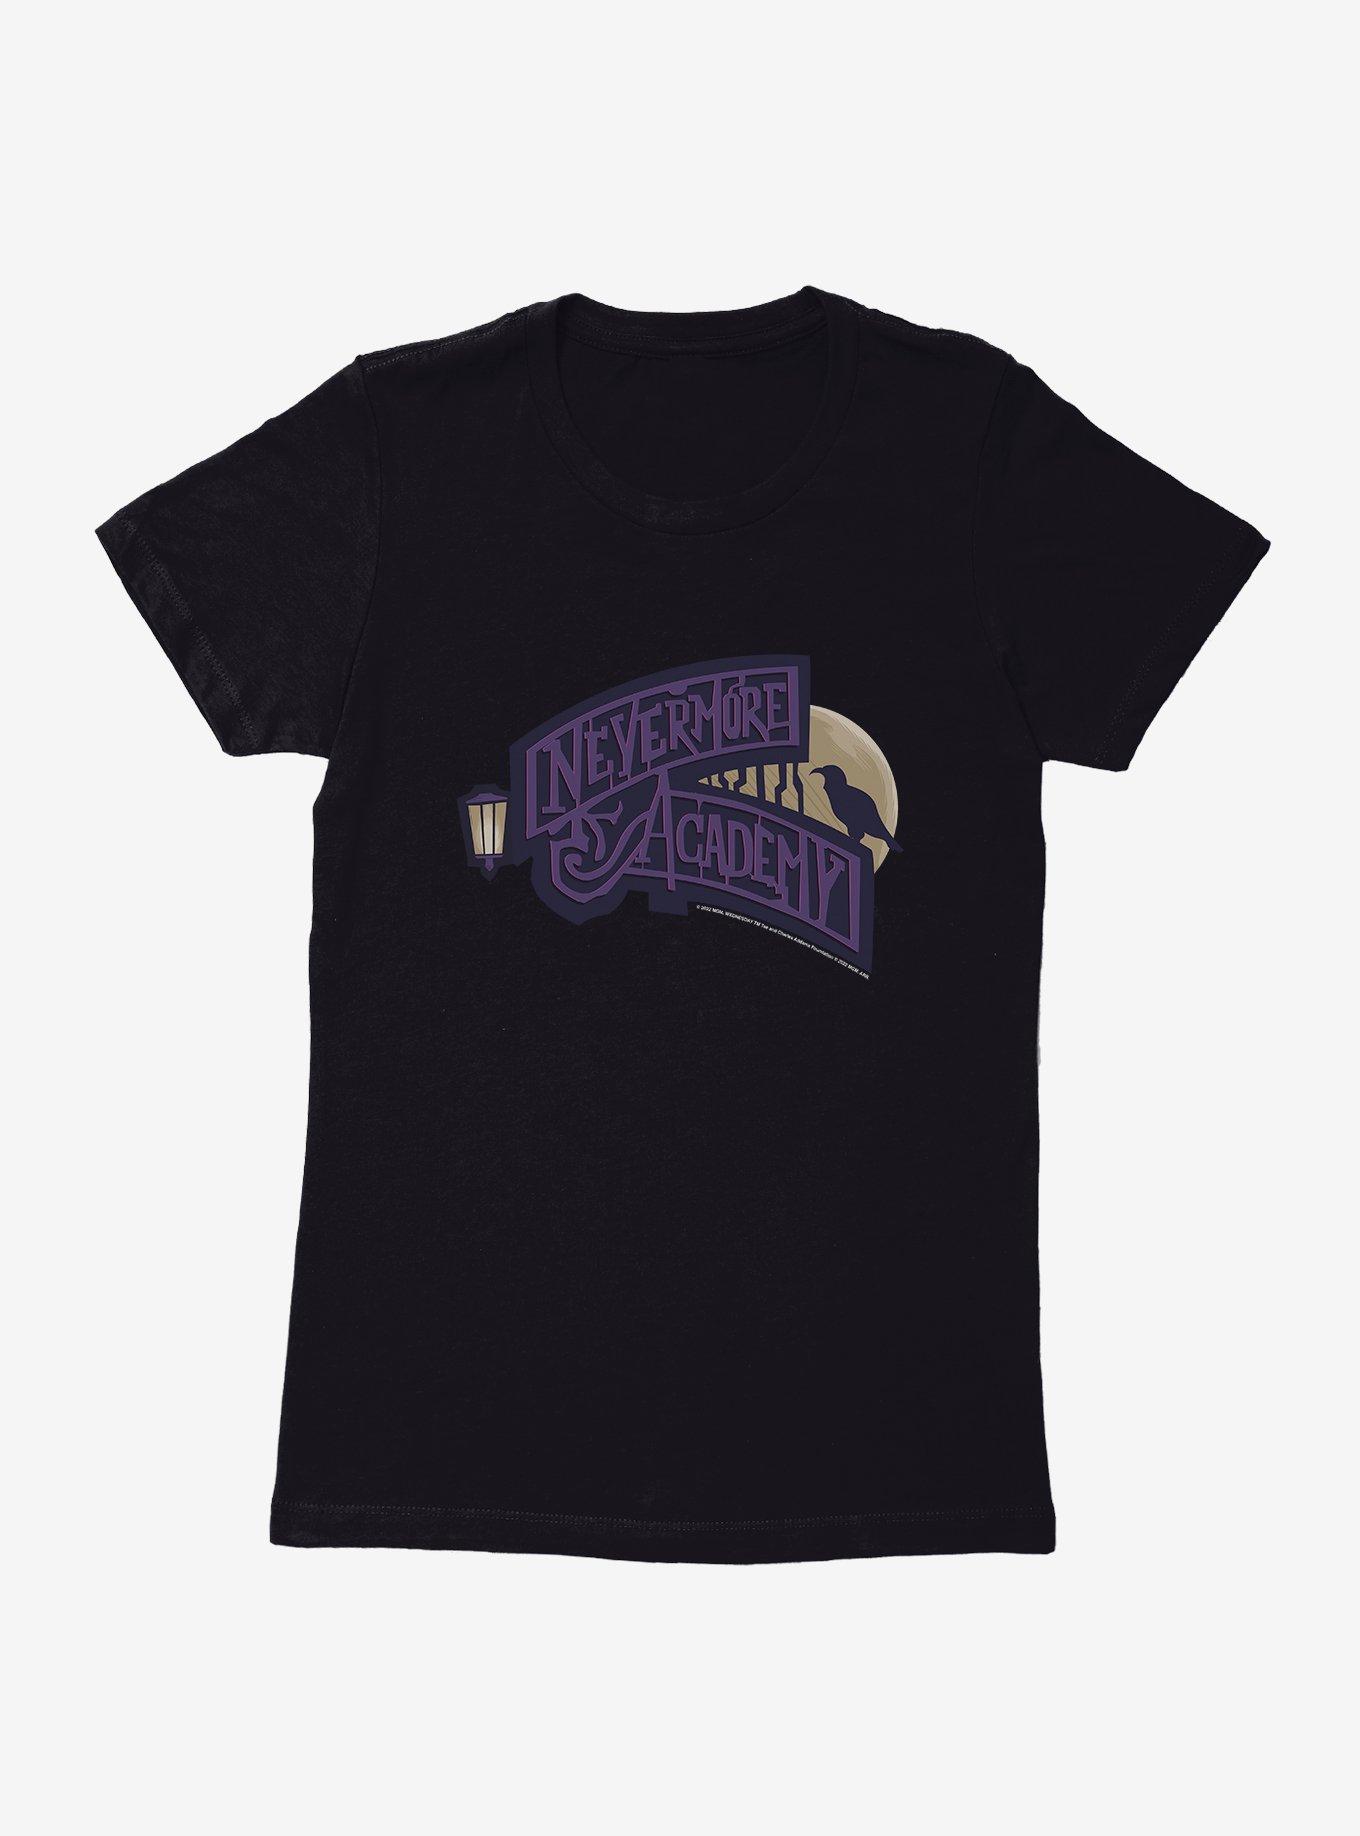 Wednesday Nevermore Academy Womens T-Shirt, , hi-res